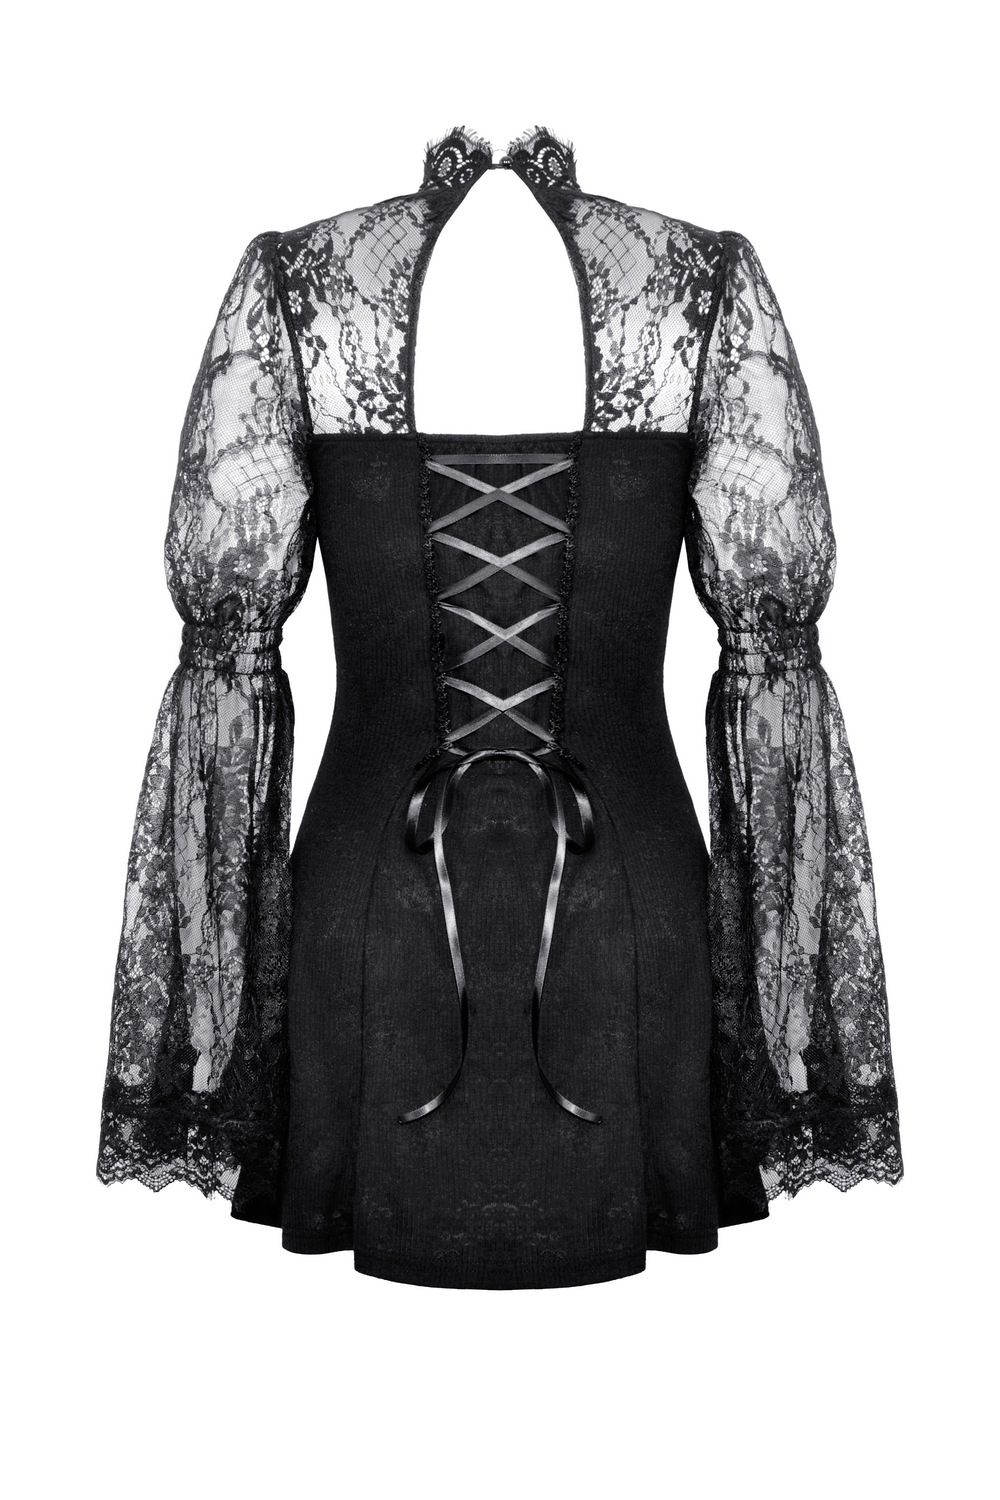 Chic Women's Black Lace Dress with Victorian Neckline